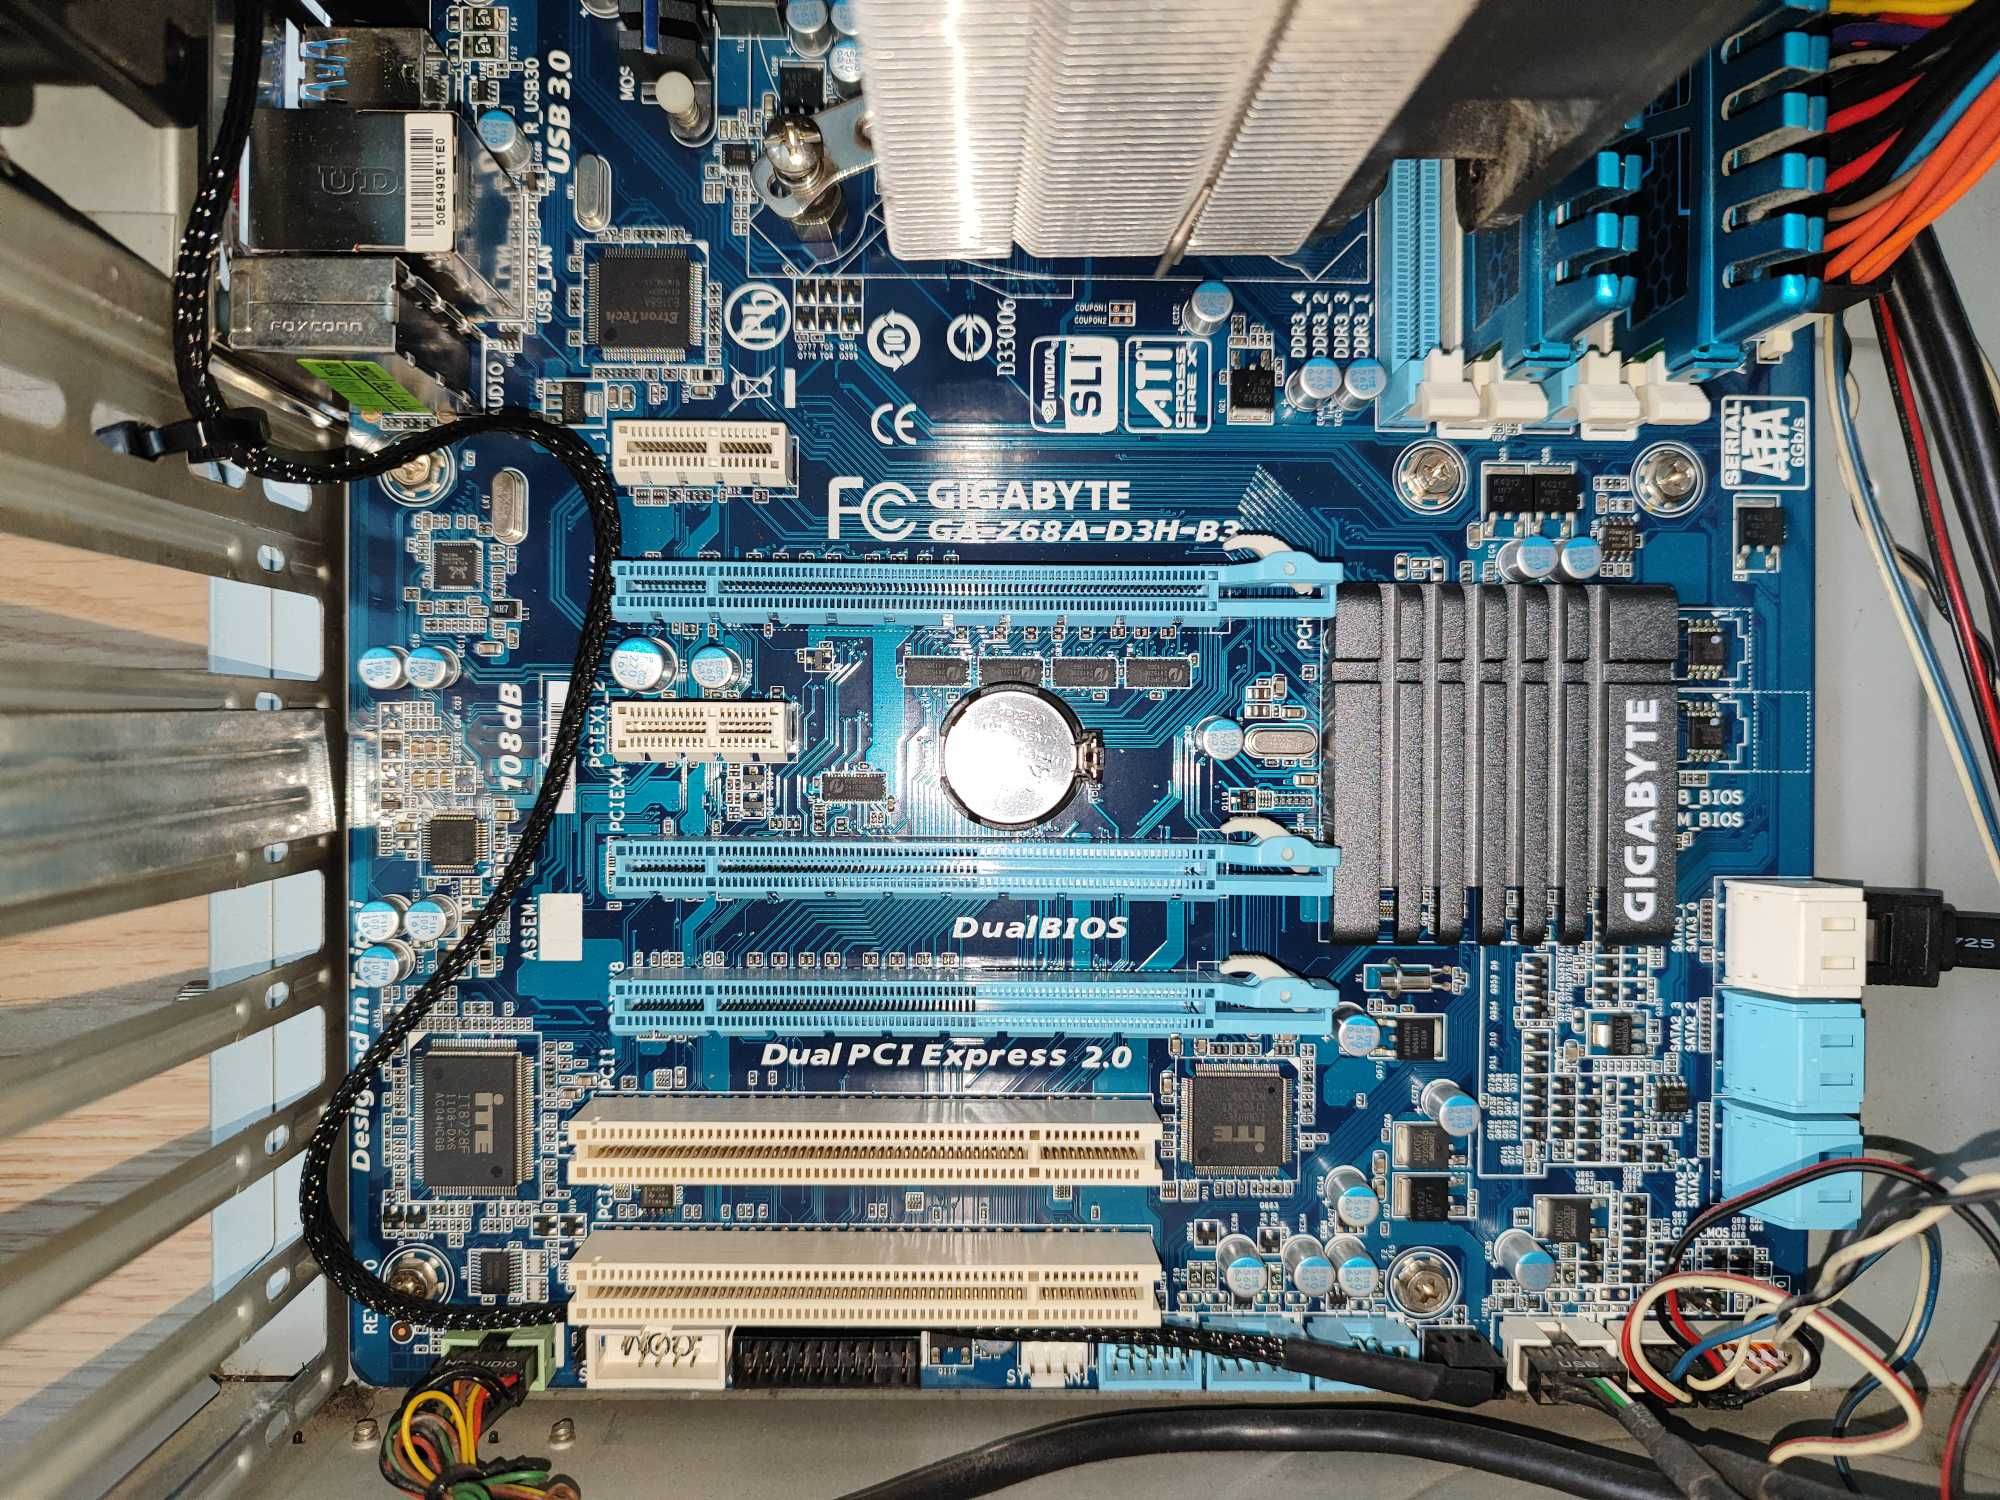 PC Intel I7  3.7 GHz + Monitor LG 22inch, 8GB RAM Corsair,  SSD 180 GB